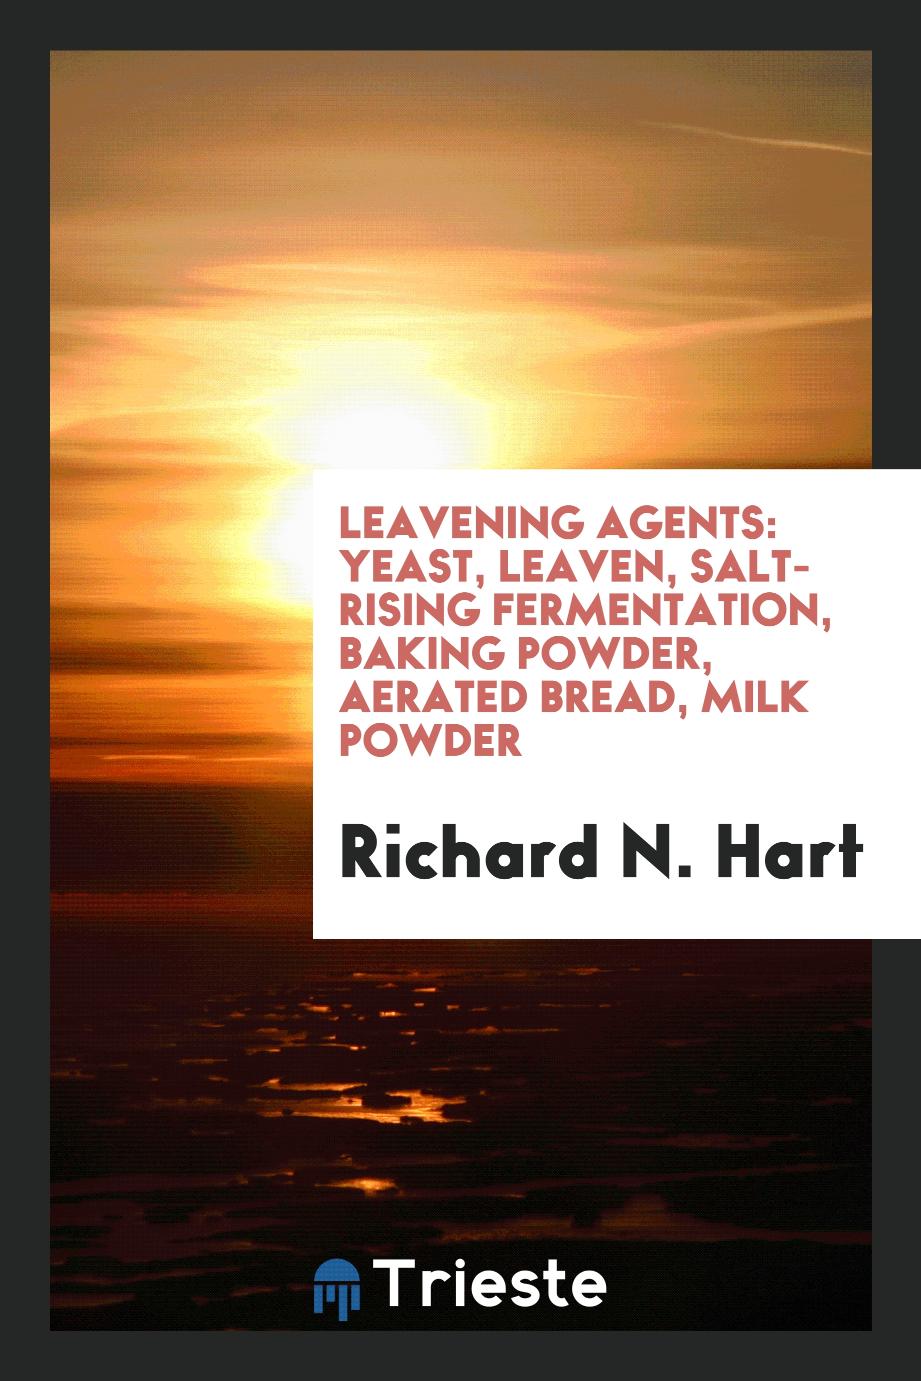 Leavening Agents: Yeast, Leaven, Salt-rising Fermentation, Baking Powder, Aerated Bread, Milk Powder